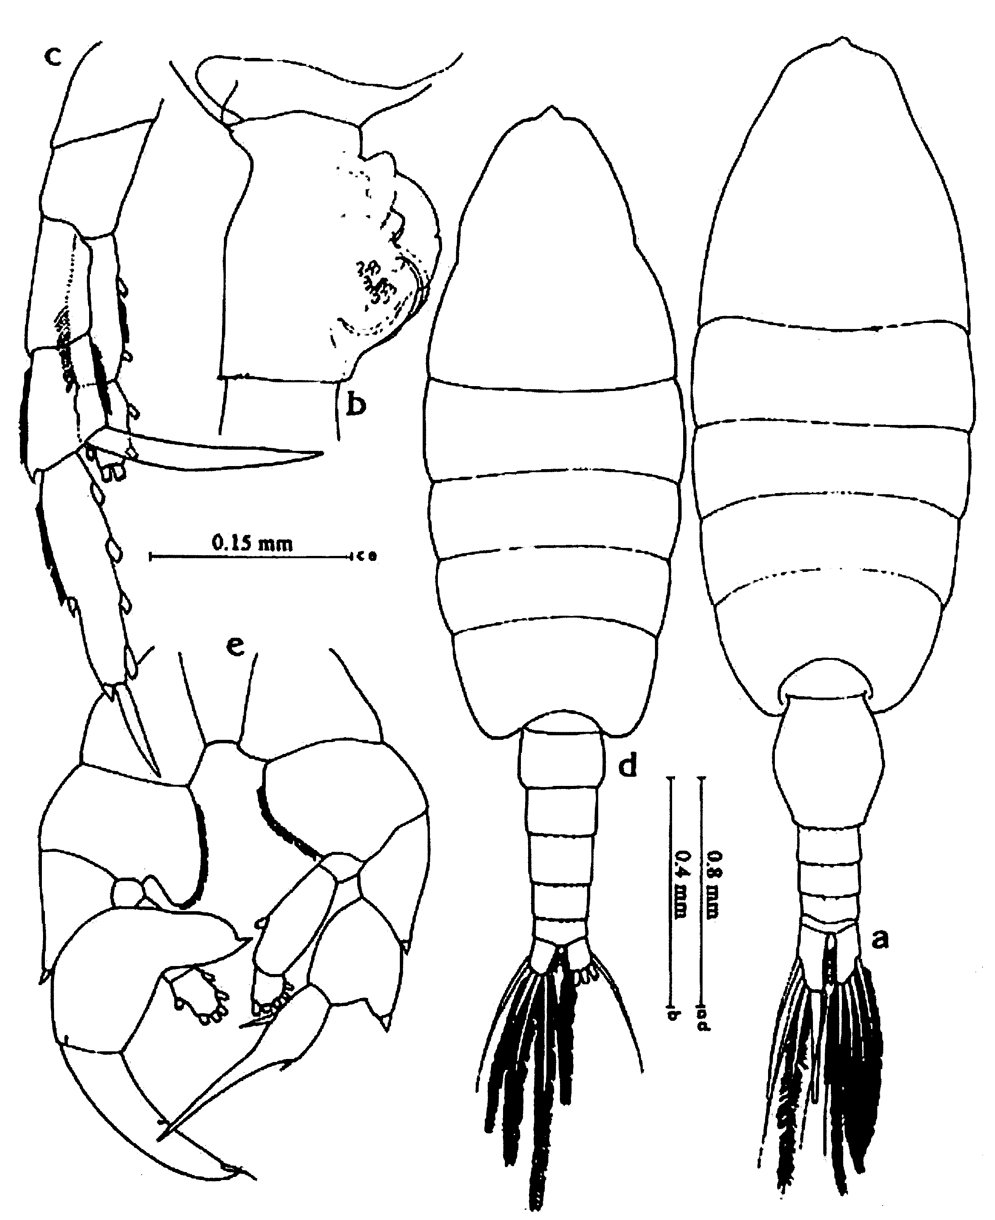 Species Heterorhabdus papilliger - Plate 28 of morphological figures